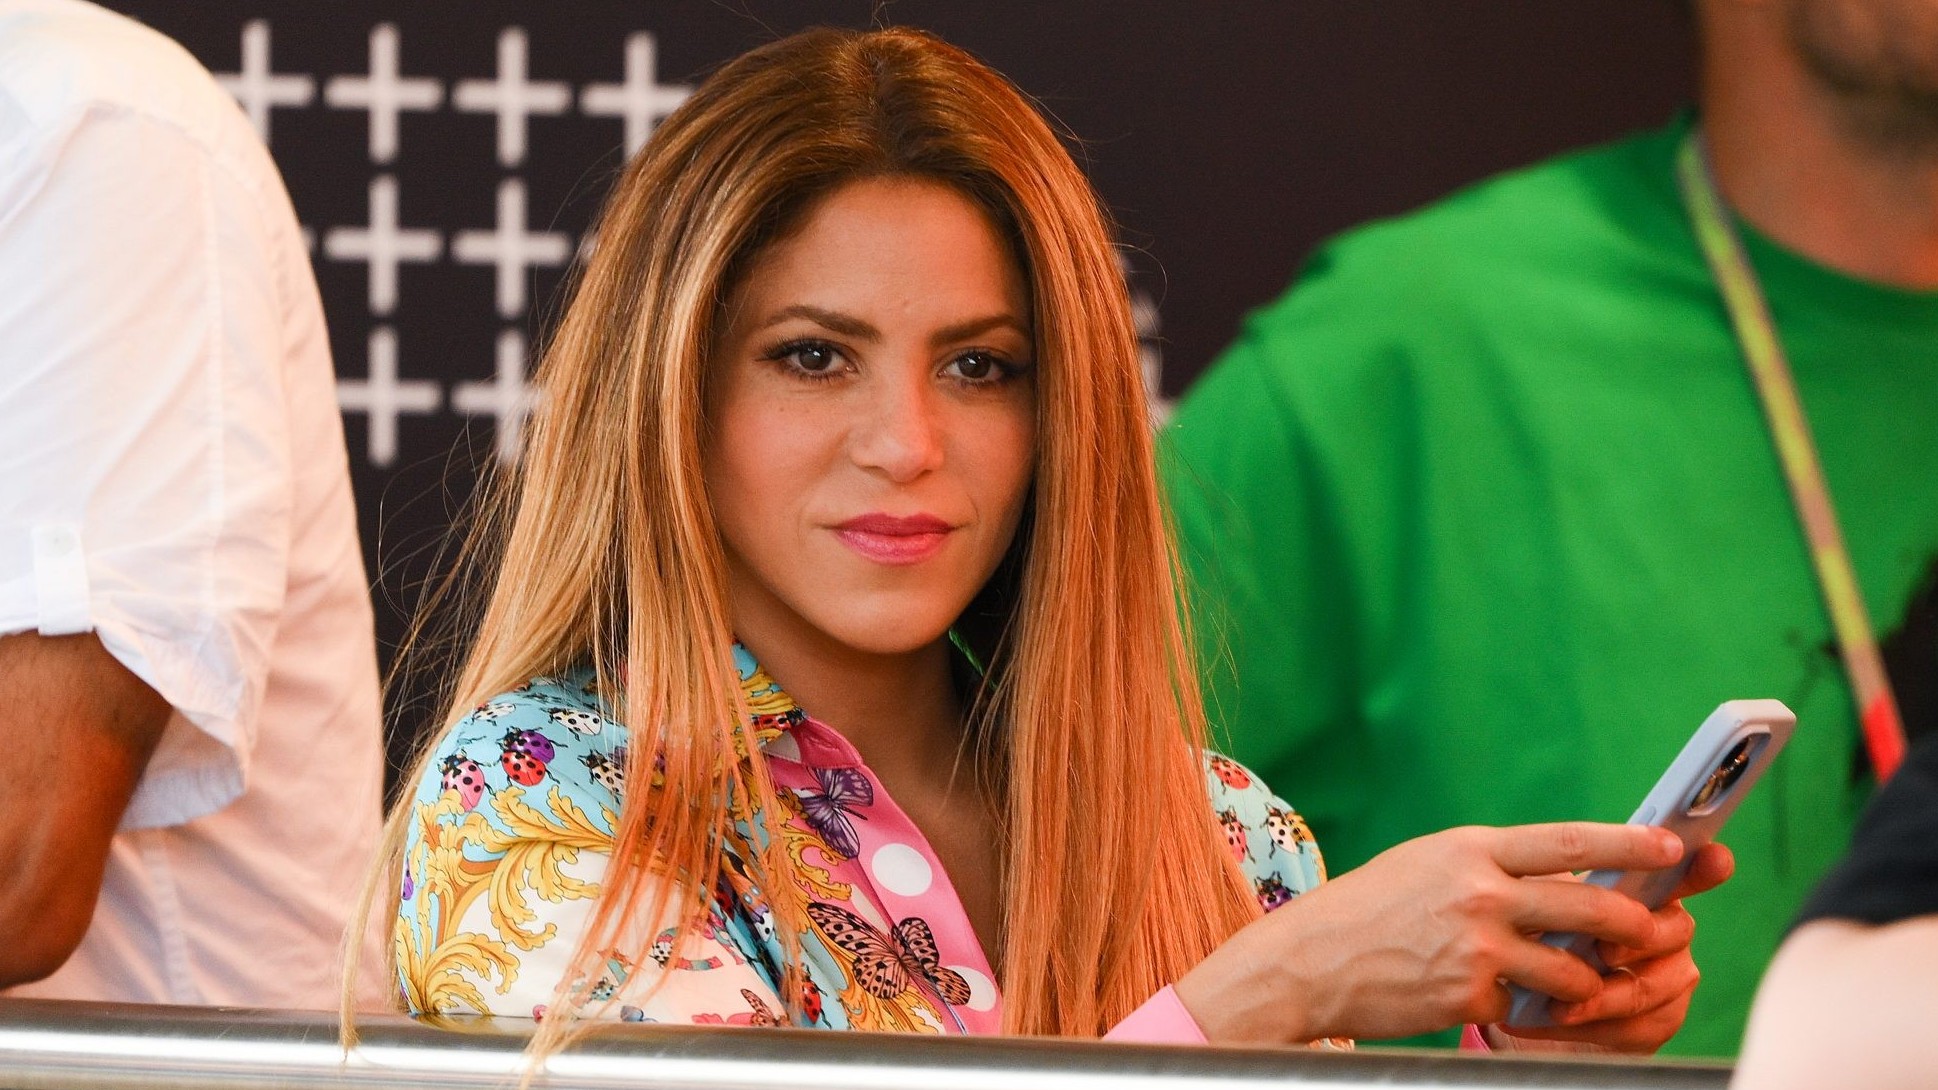 http://www.fronteradigital.com.ve/El llamativo look de Shakira para asistir a la F1 en Barcelona